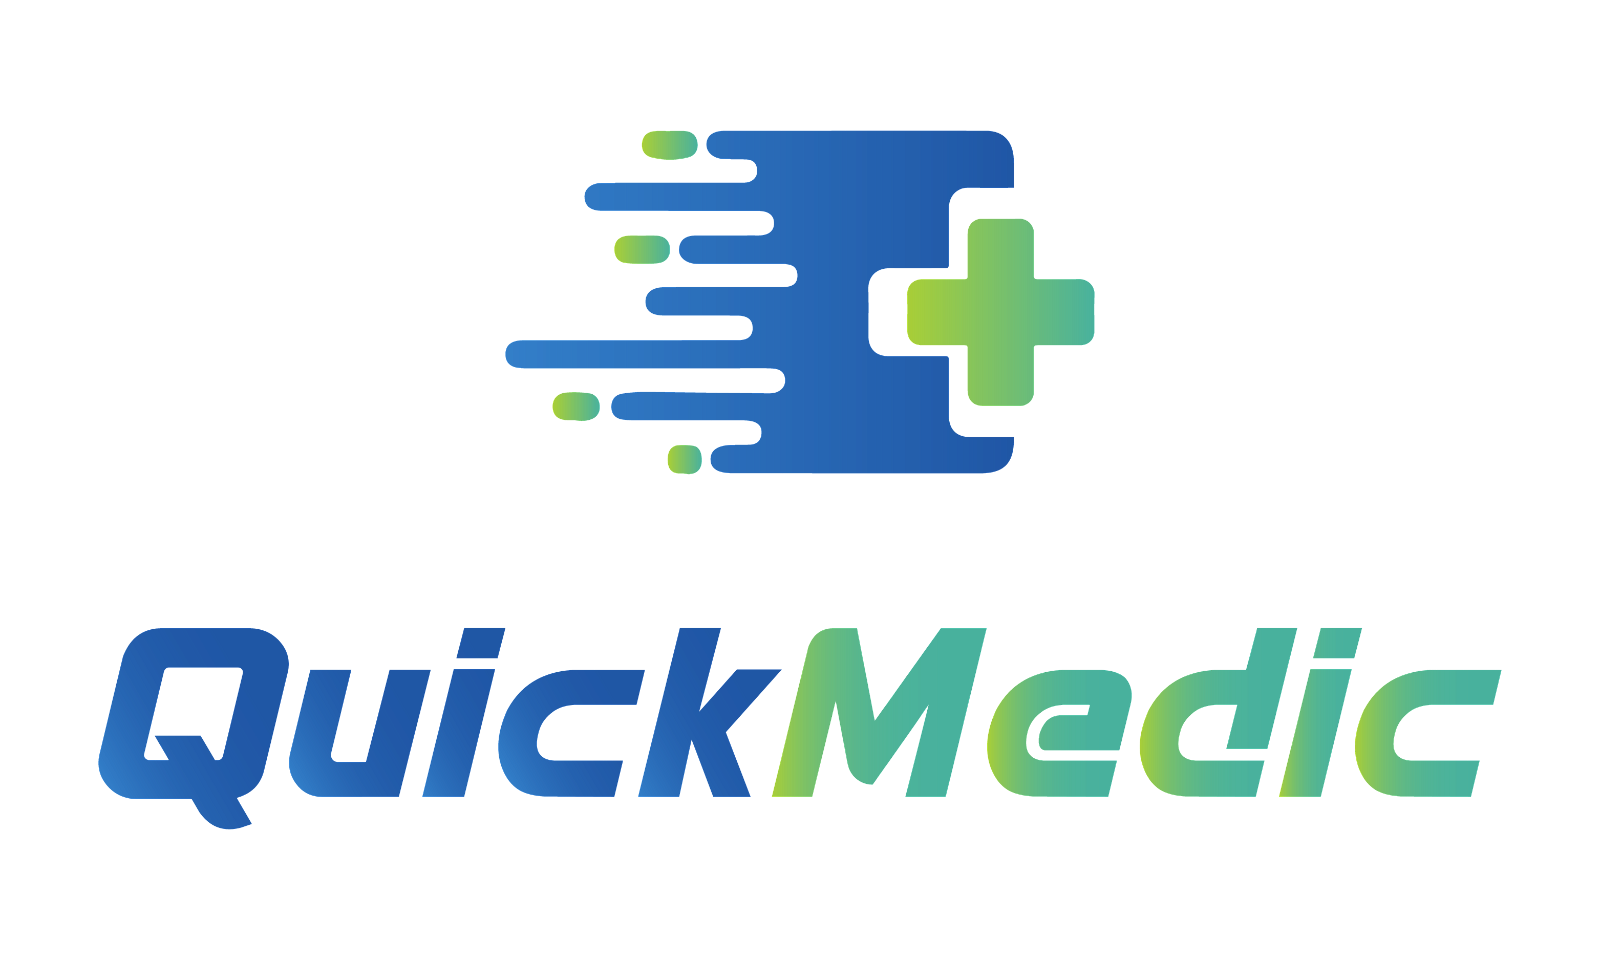 QuickMedic.com - Creative brandable domain for sale